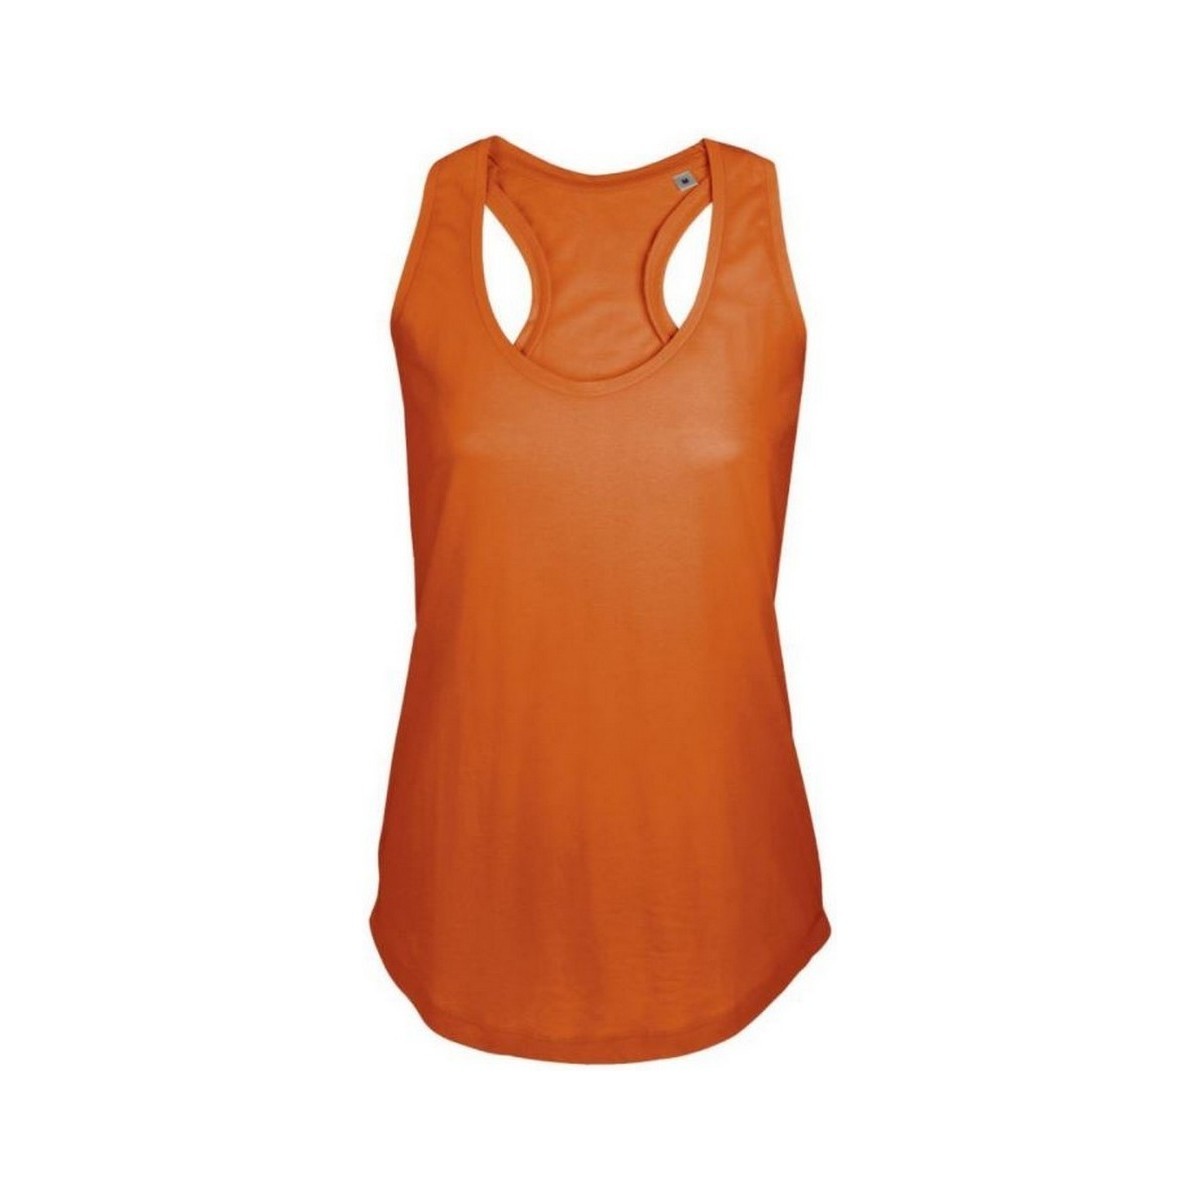 textil Mujer Camisetas sin mangas Sols Moka Naranja